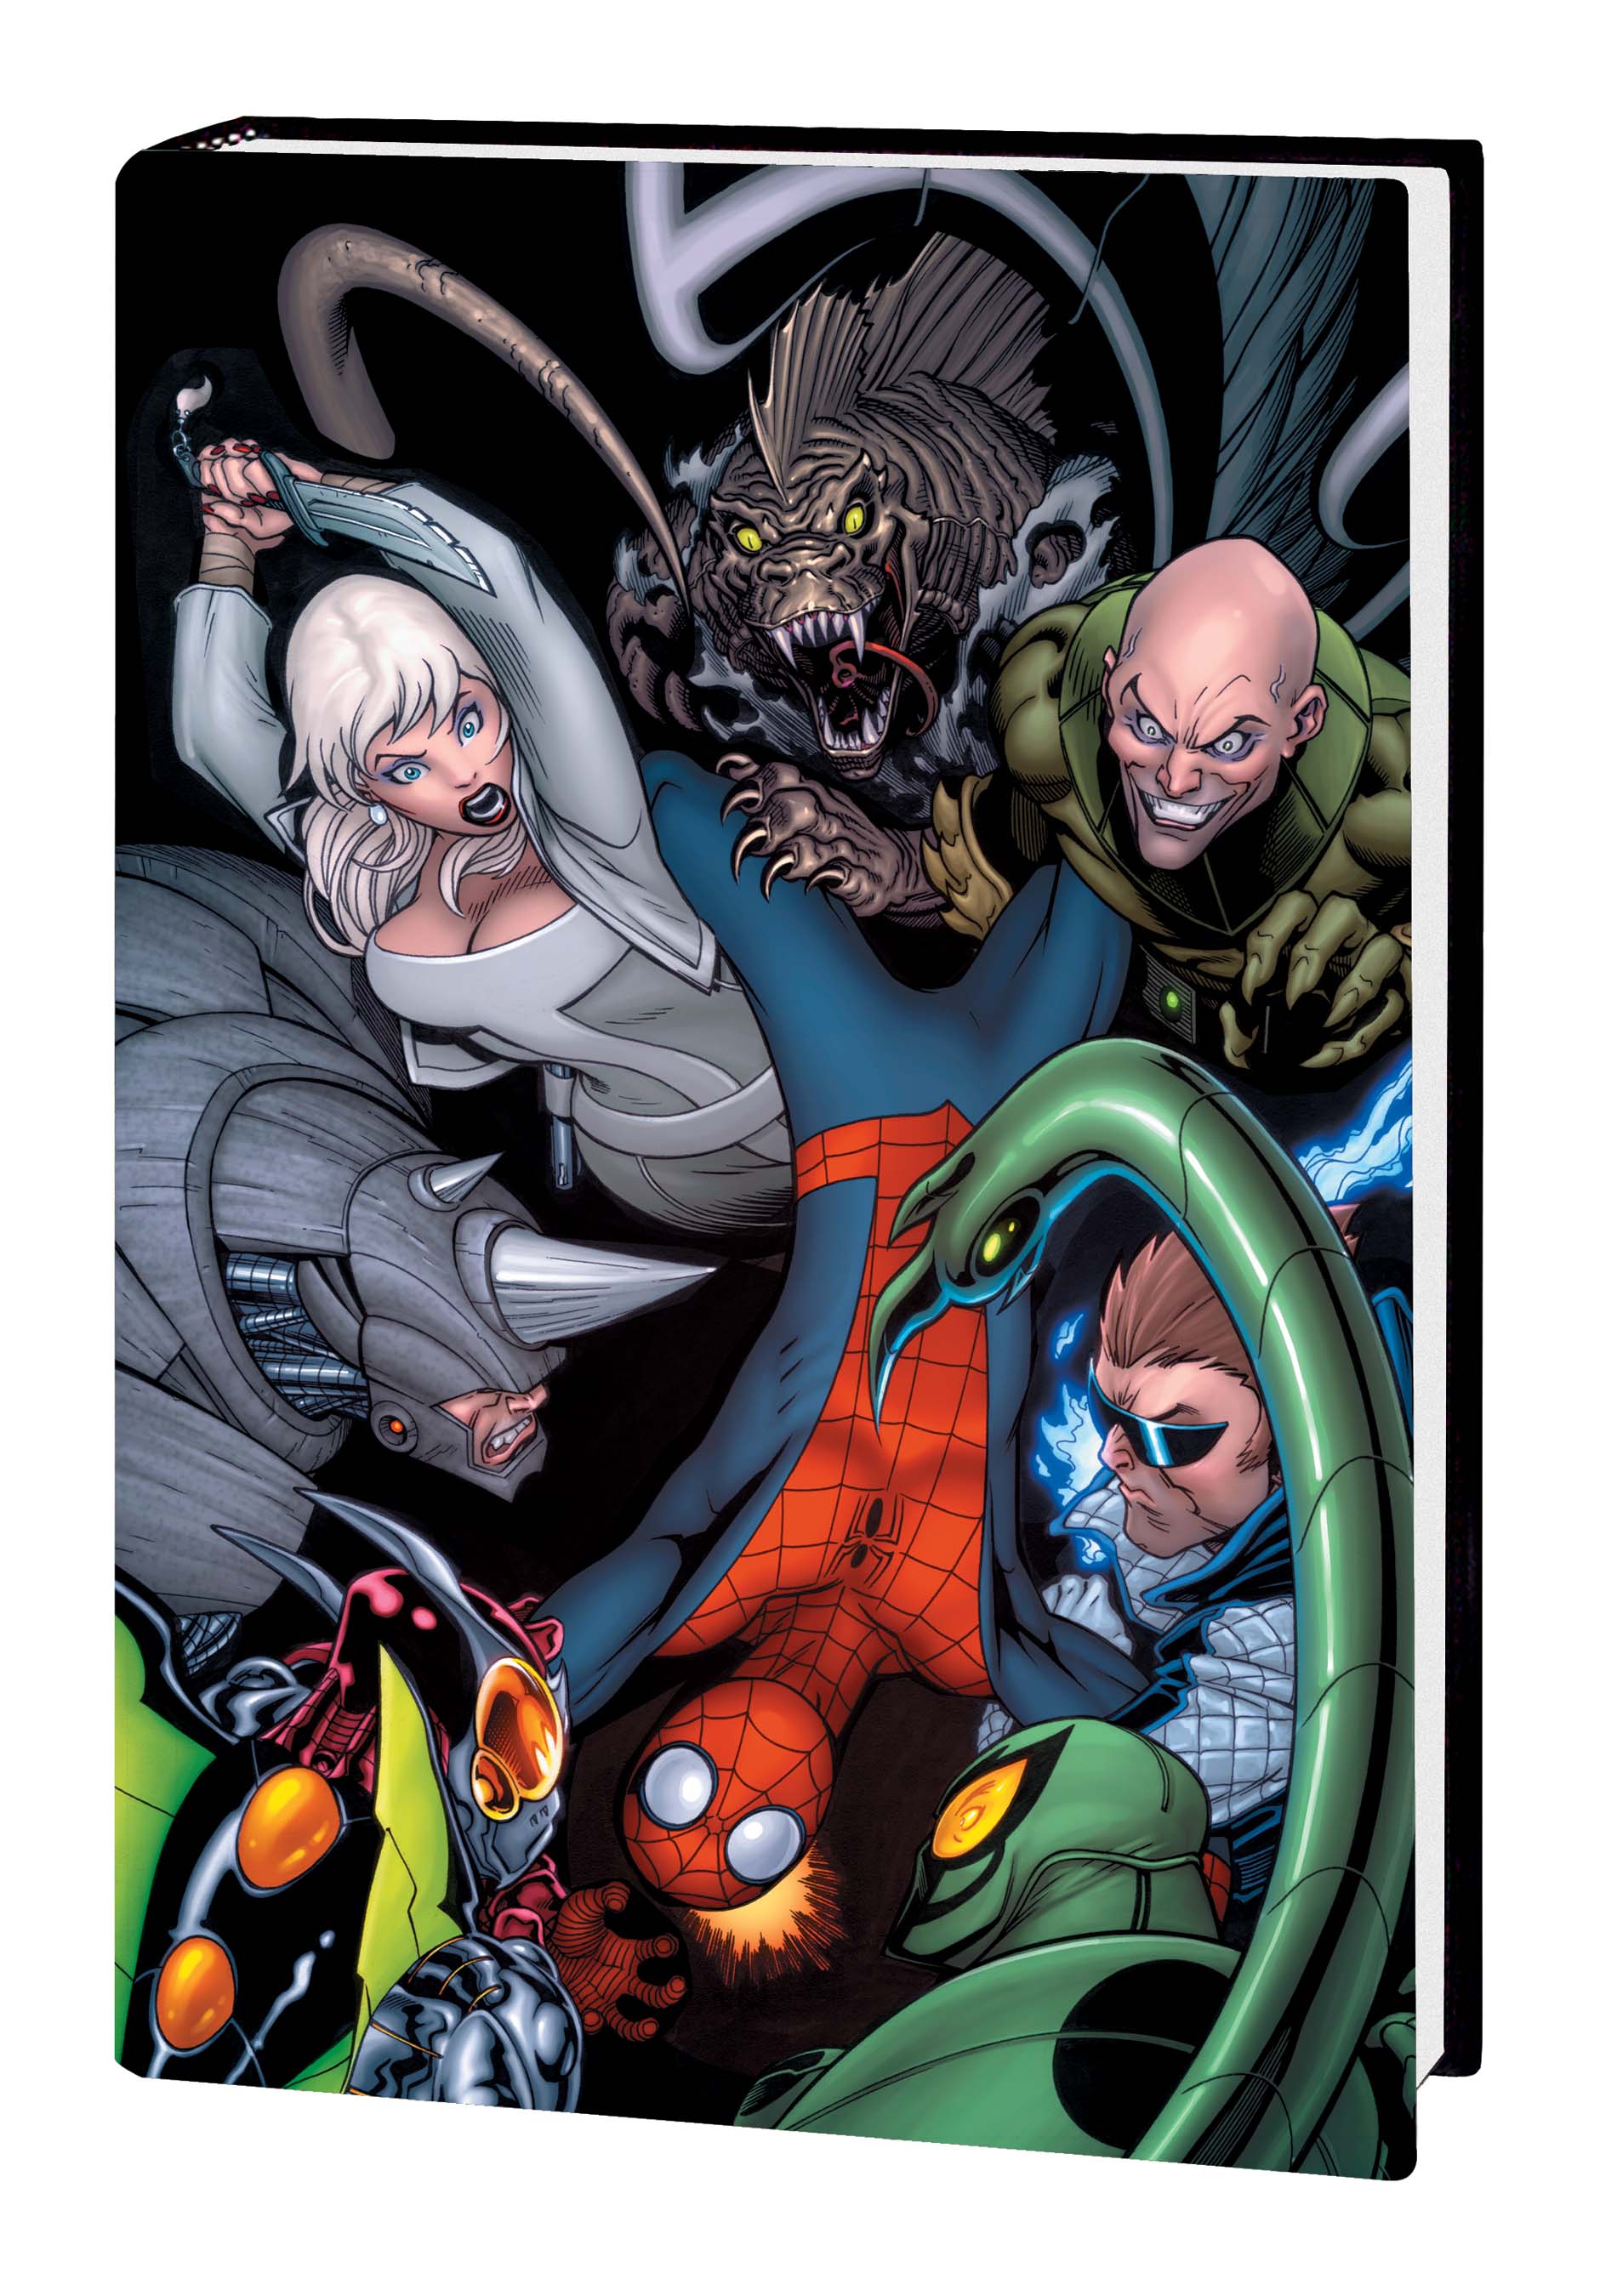 Ultimate Comics Spider-Man: Death of Spider-Man (Hardcover)